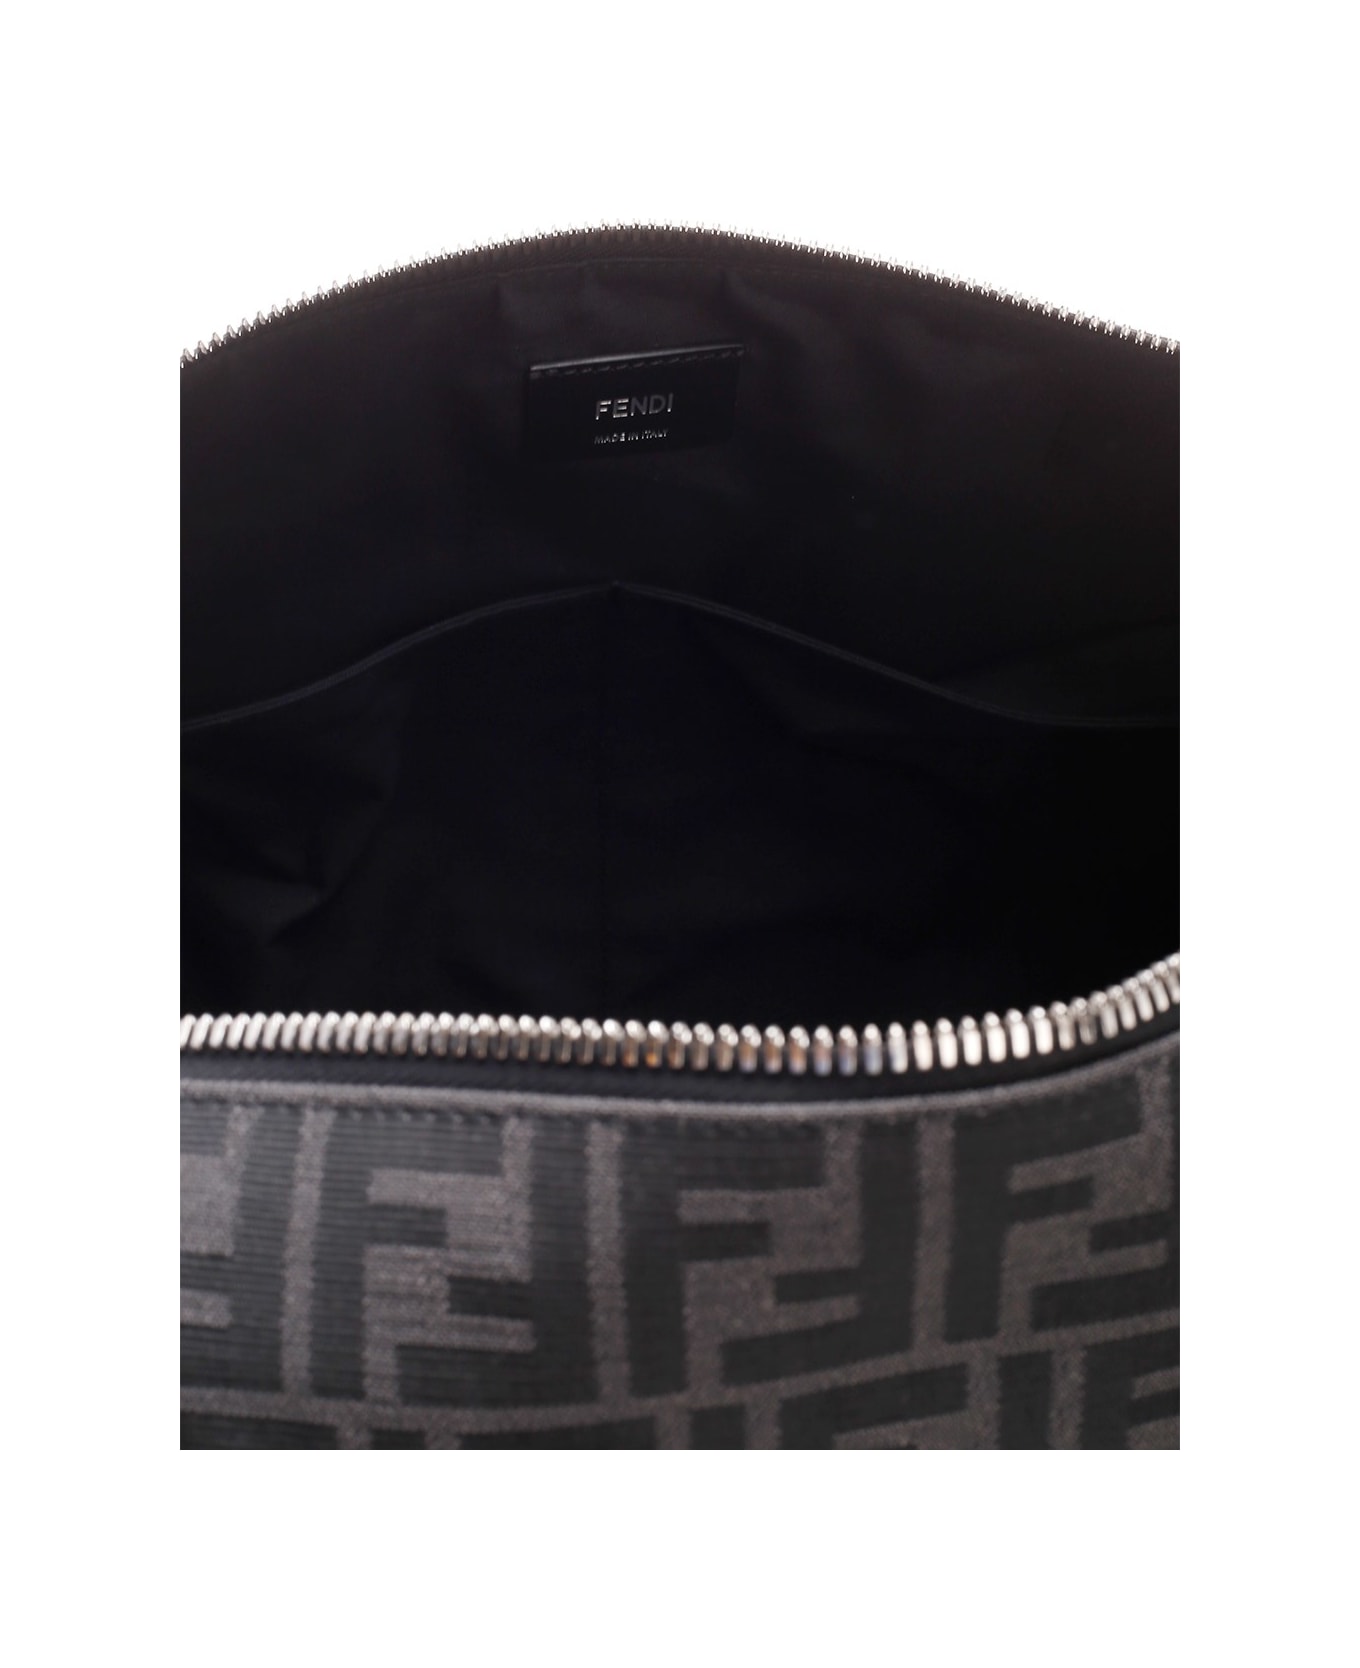 Fendi Travel Bag With All-over "ff" Monogram - Grey トラベルバッグ